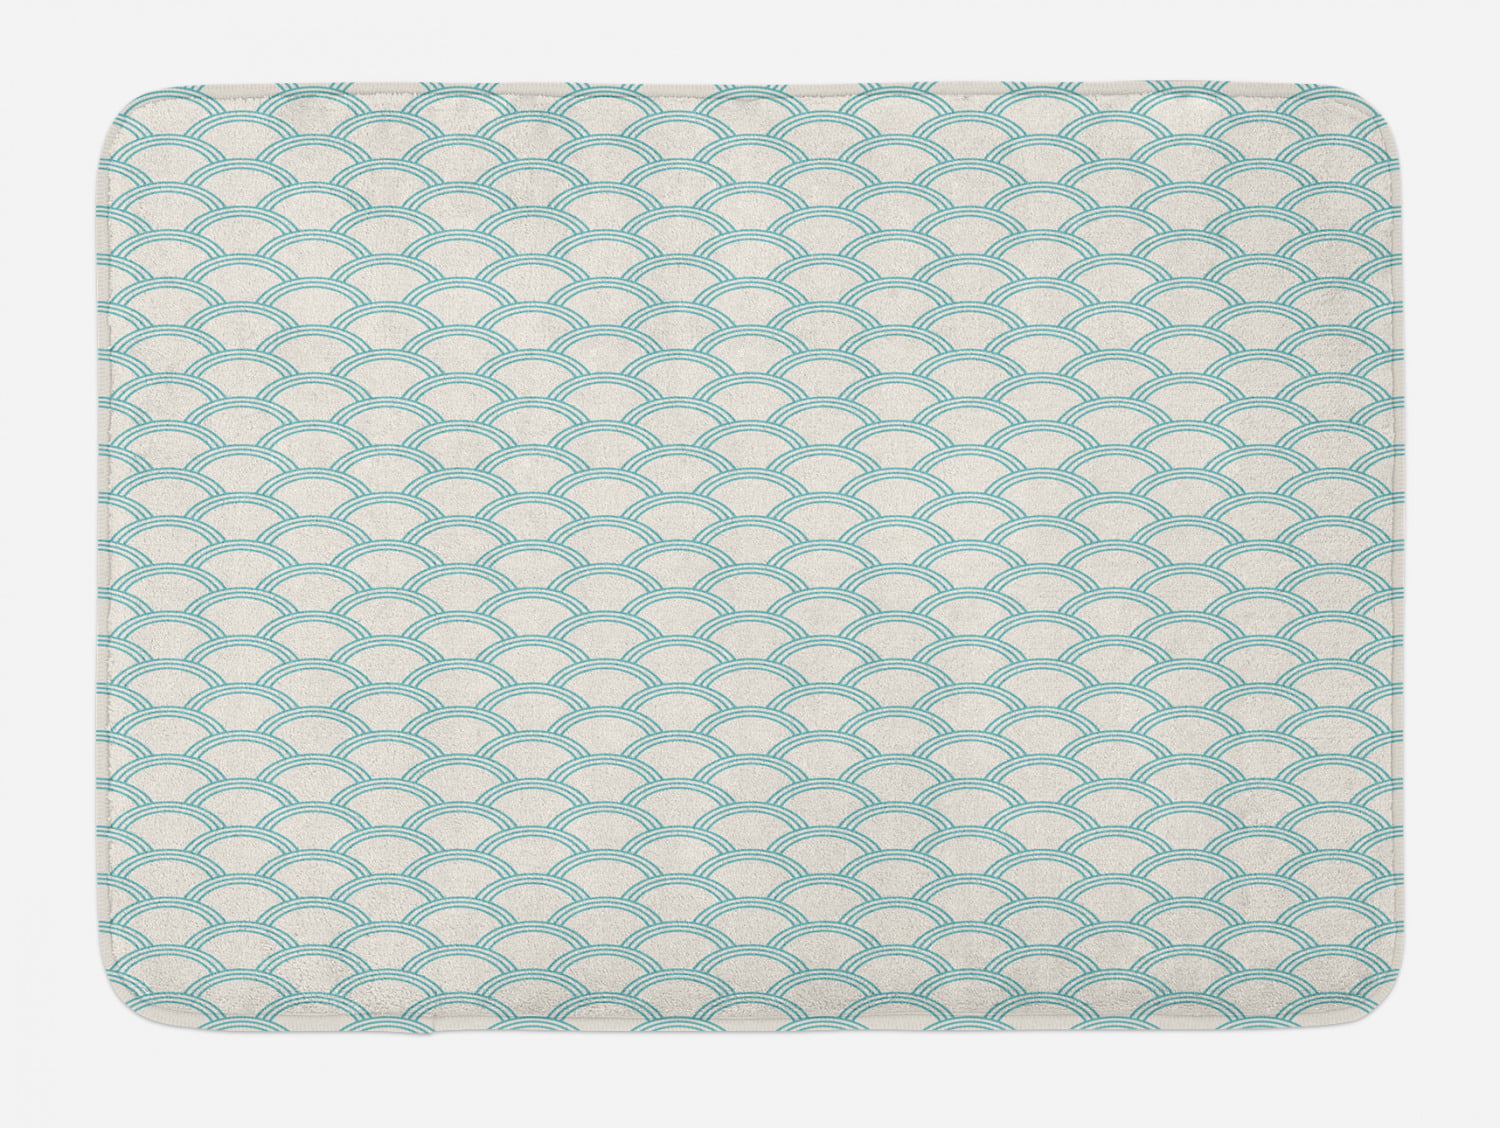 Decorative Polyester Floor Mat with Non-Skid Backing 30 X 18 Simplistic Minimalist Design Maritime Oceanic Coastal Theme Water Splash Print Ambesonne White Doormat Turquoise Cream 